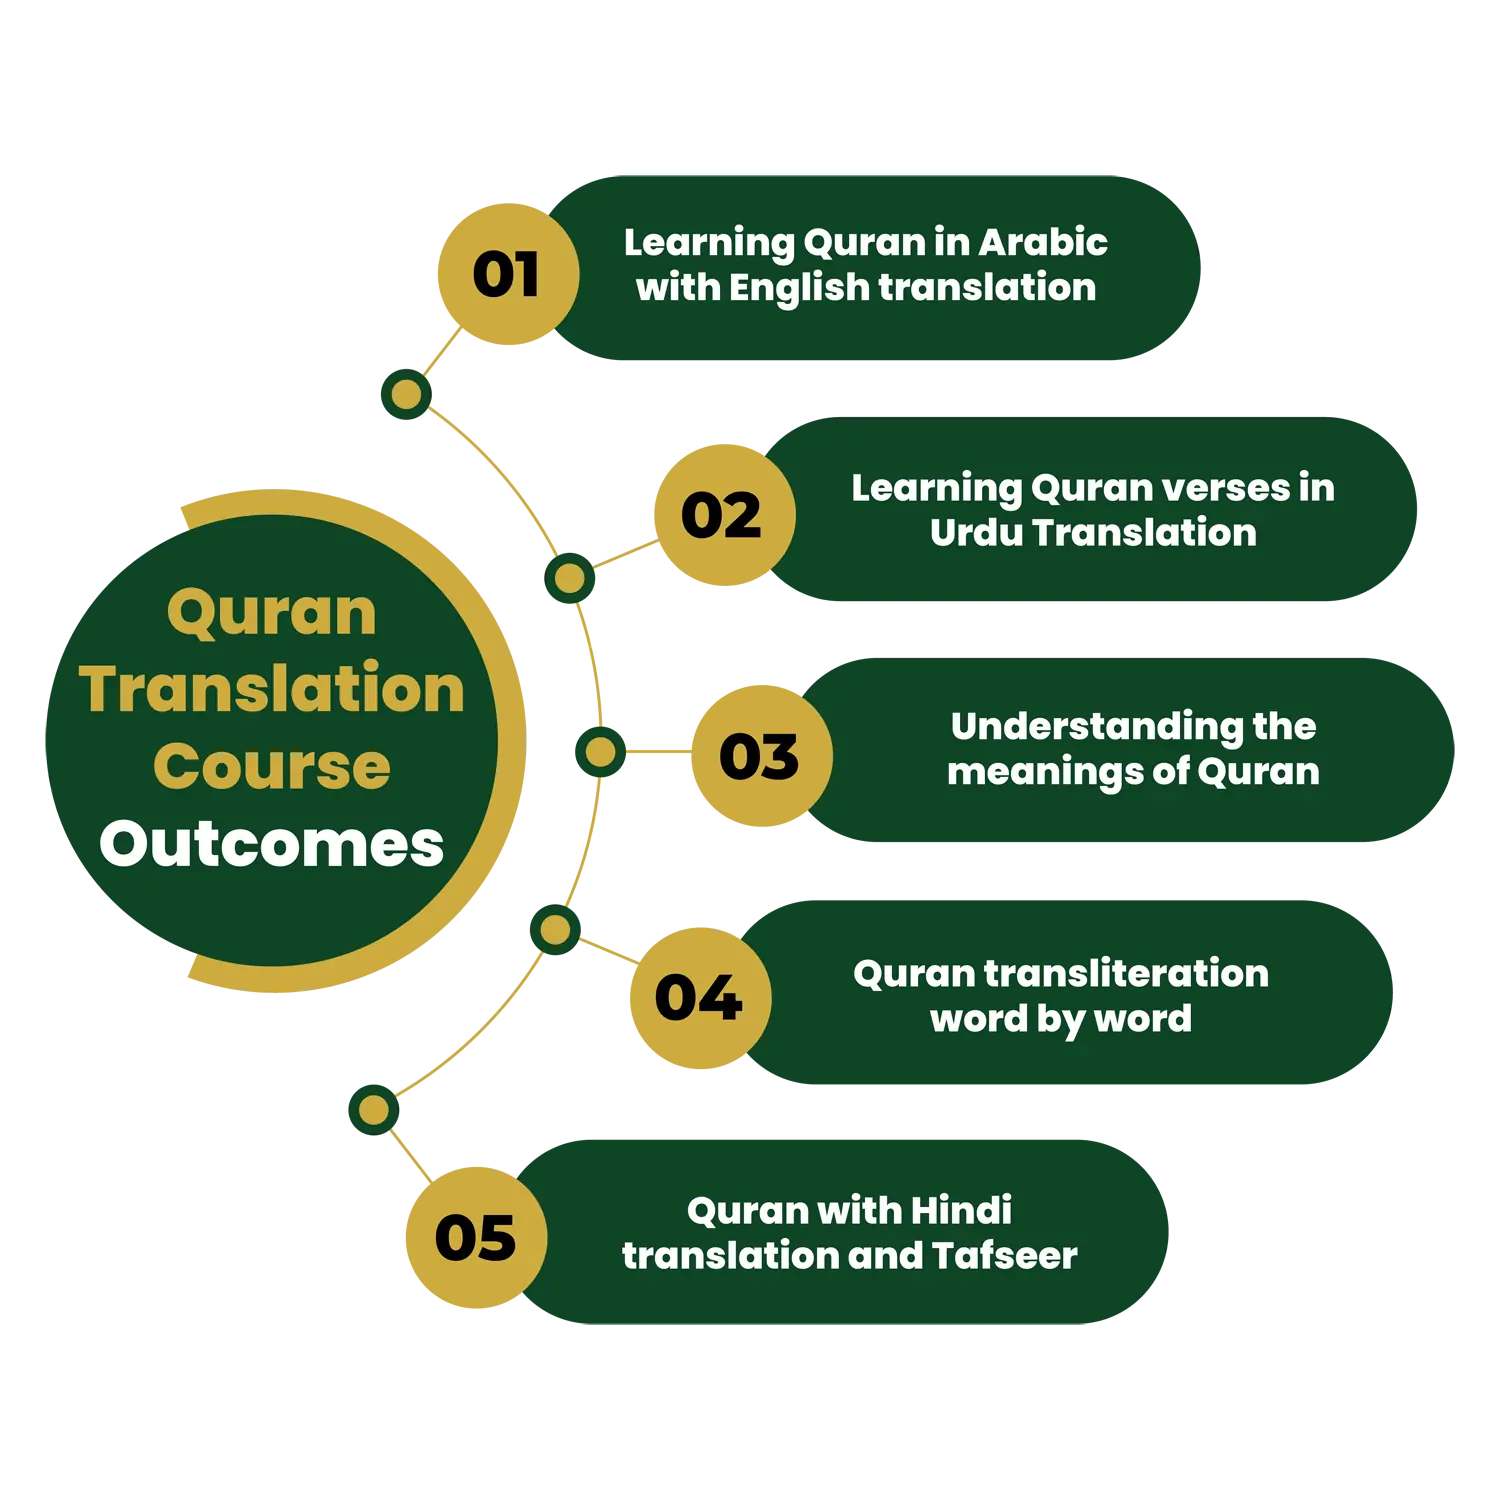 Quran translation course outcomes